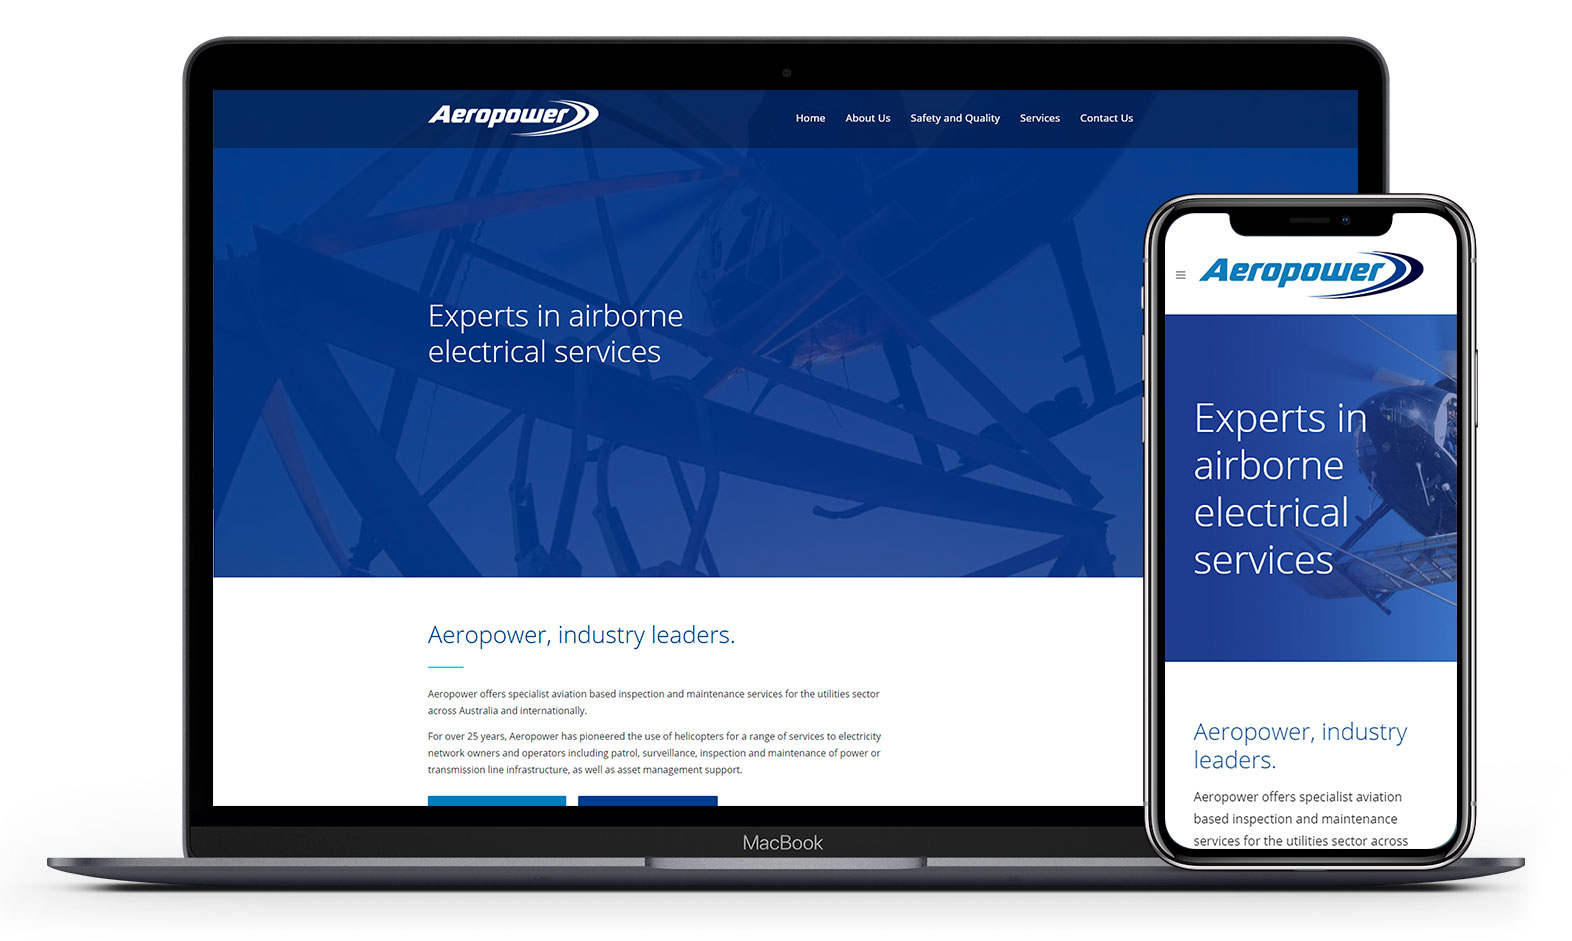 Aeropower's website design displayed responsive devices